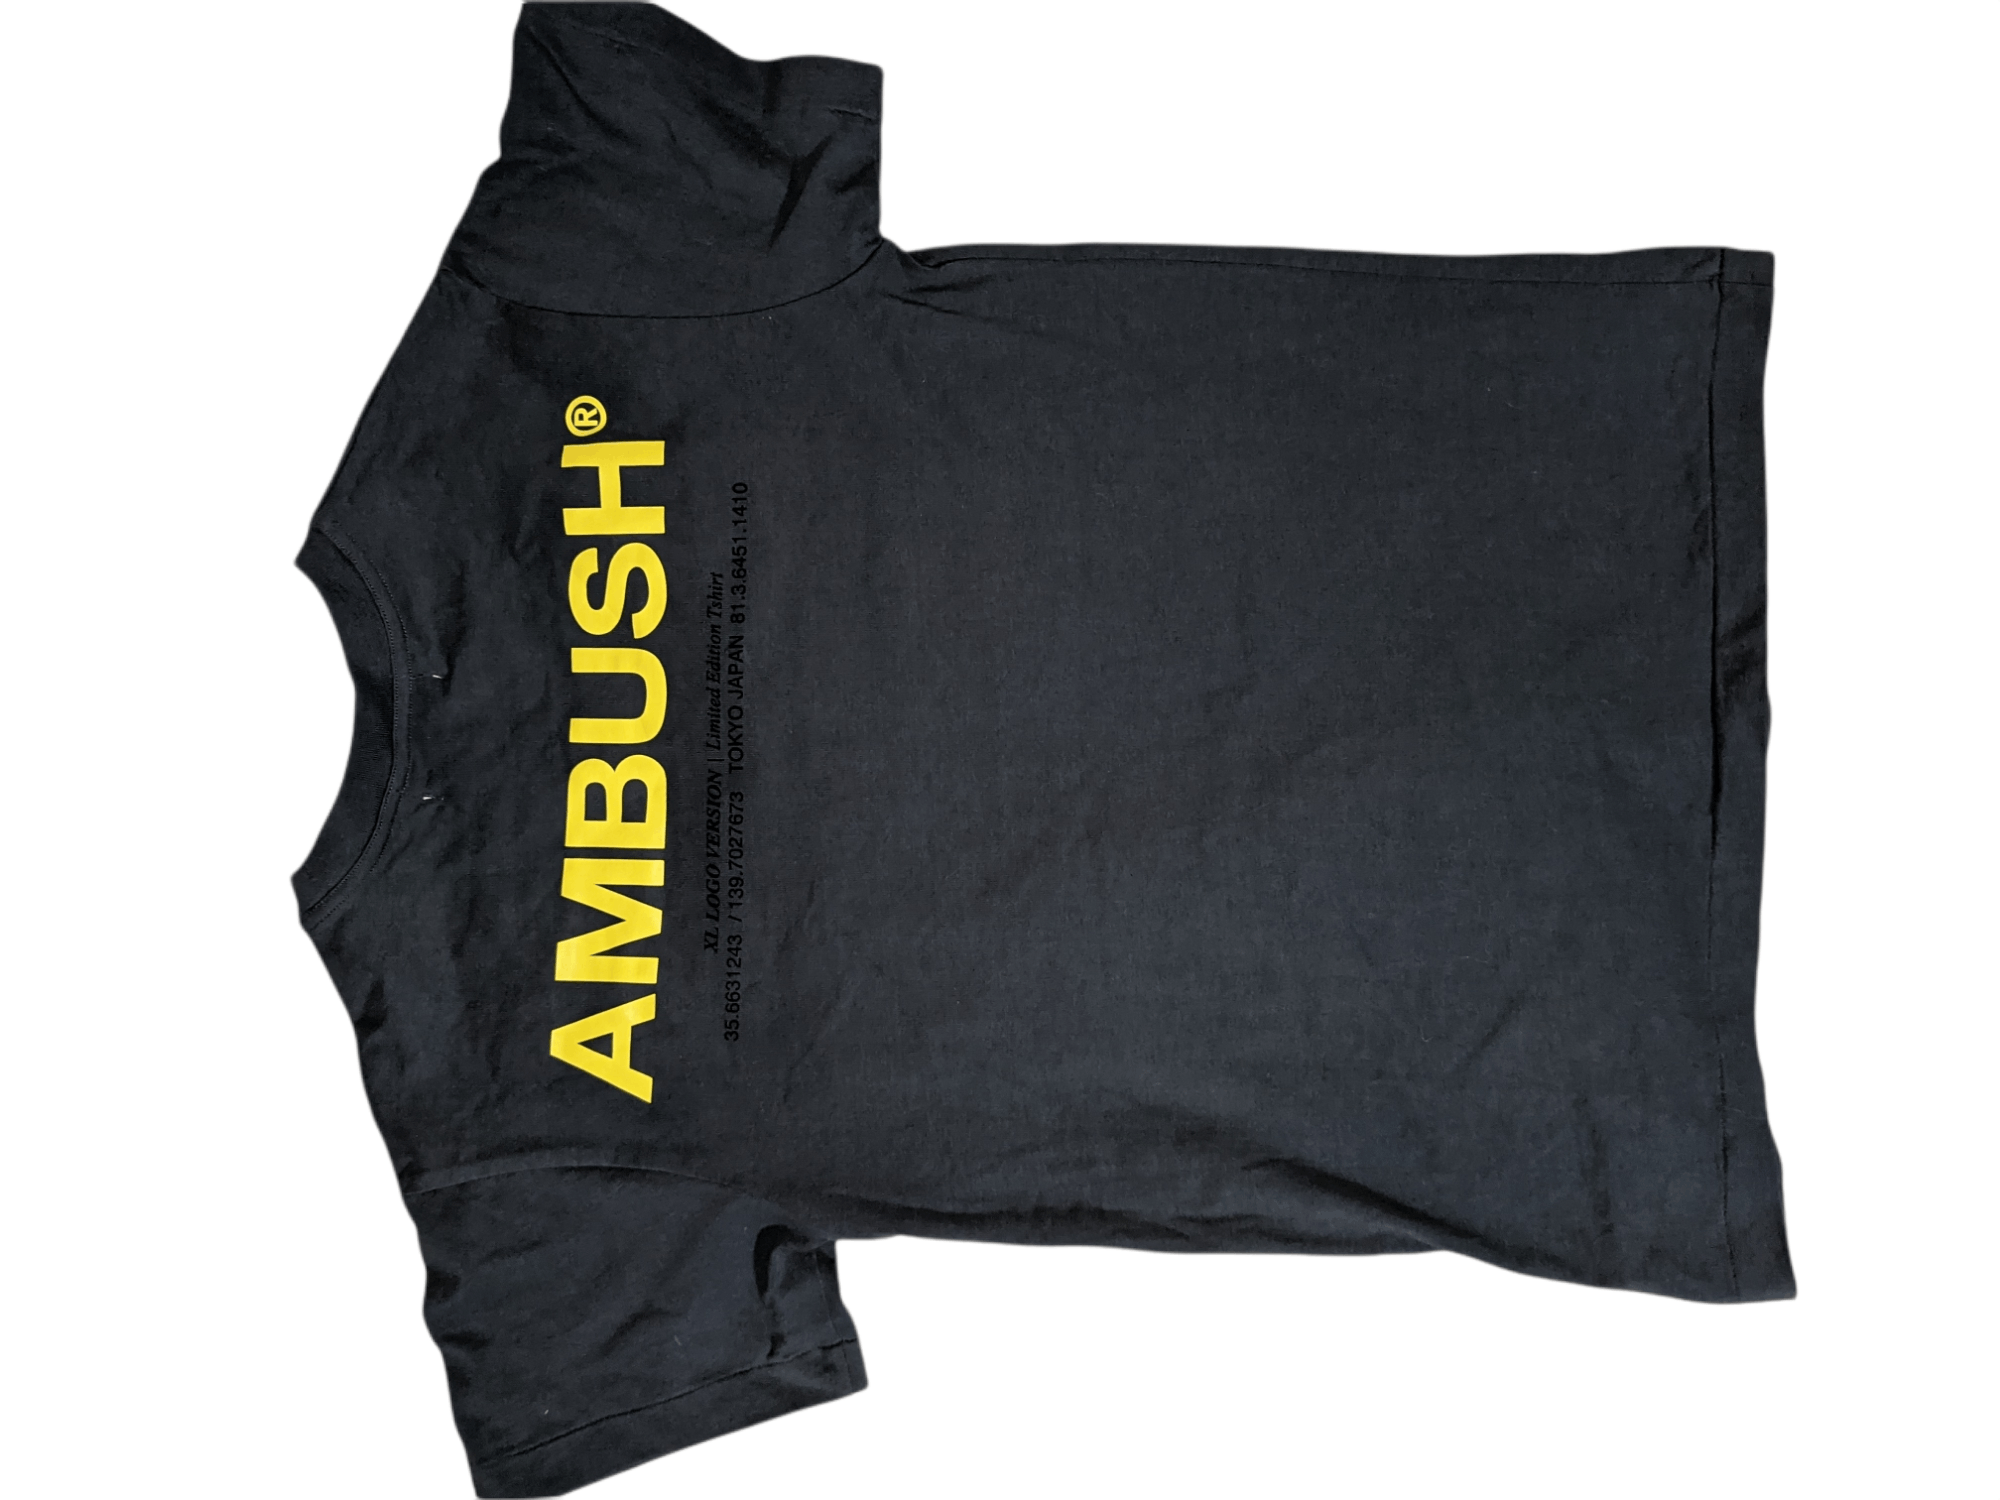 Ambush Design Ambush XL Logo Version Tee shirt Japan Small | Grailed